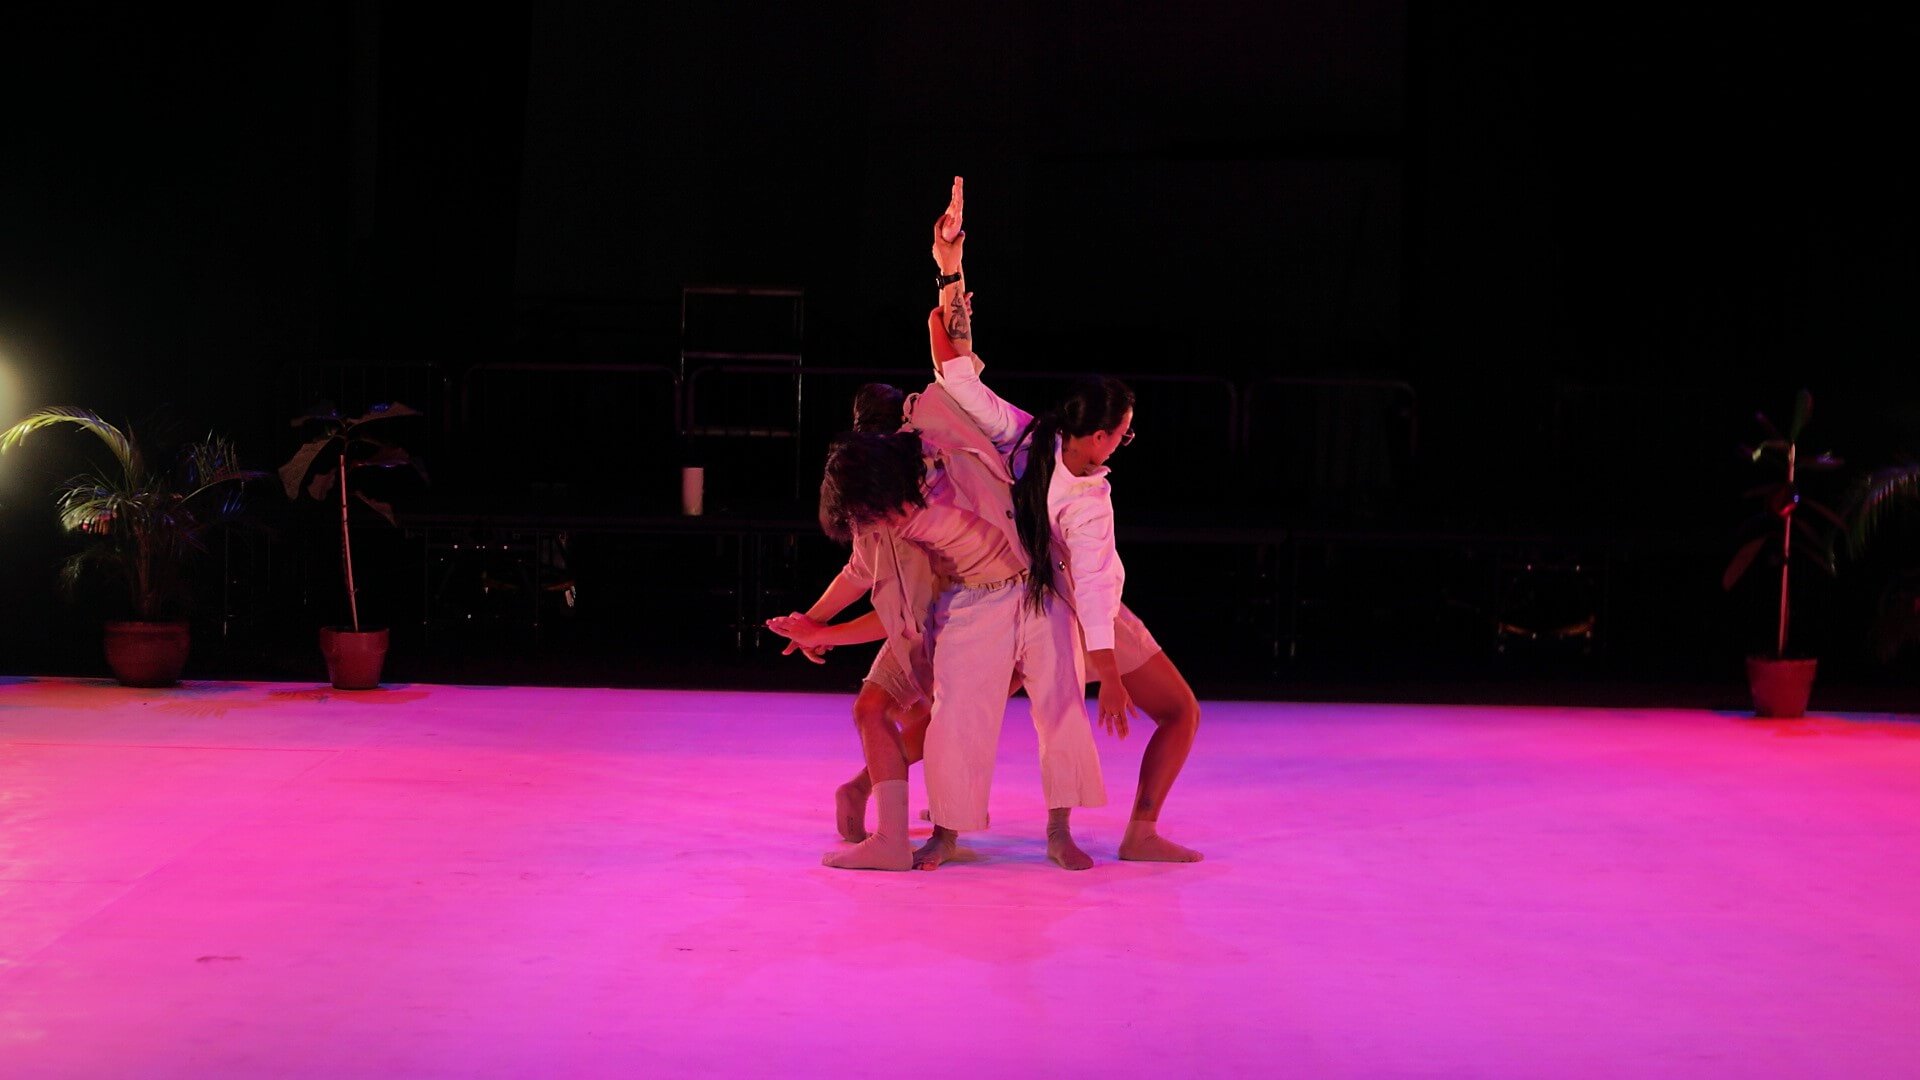 Daloy Dance Company's ItikLandia performance at the British School Manila